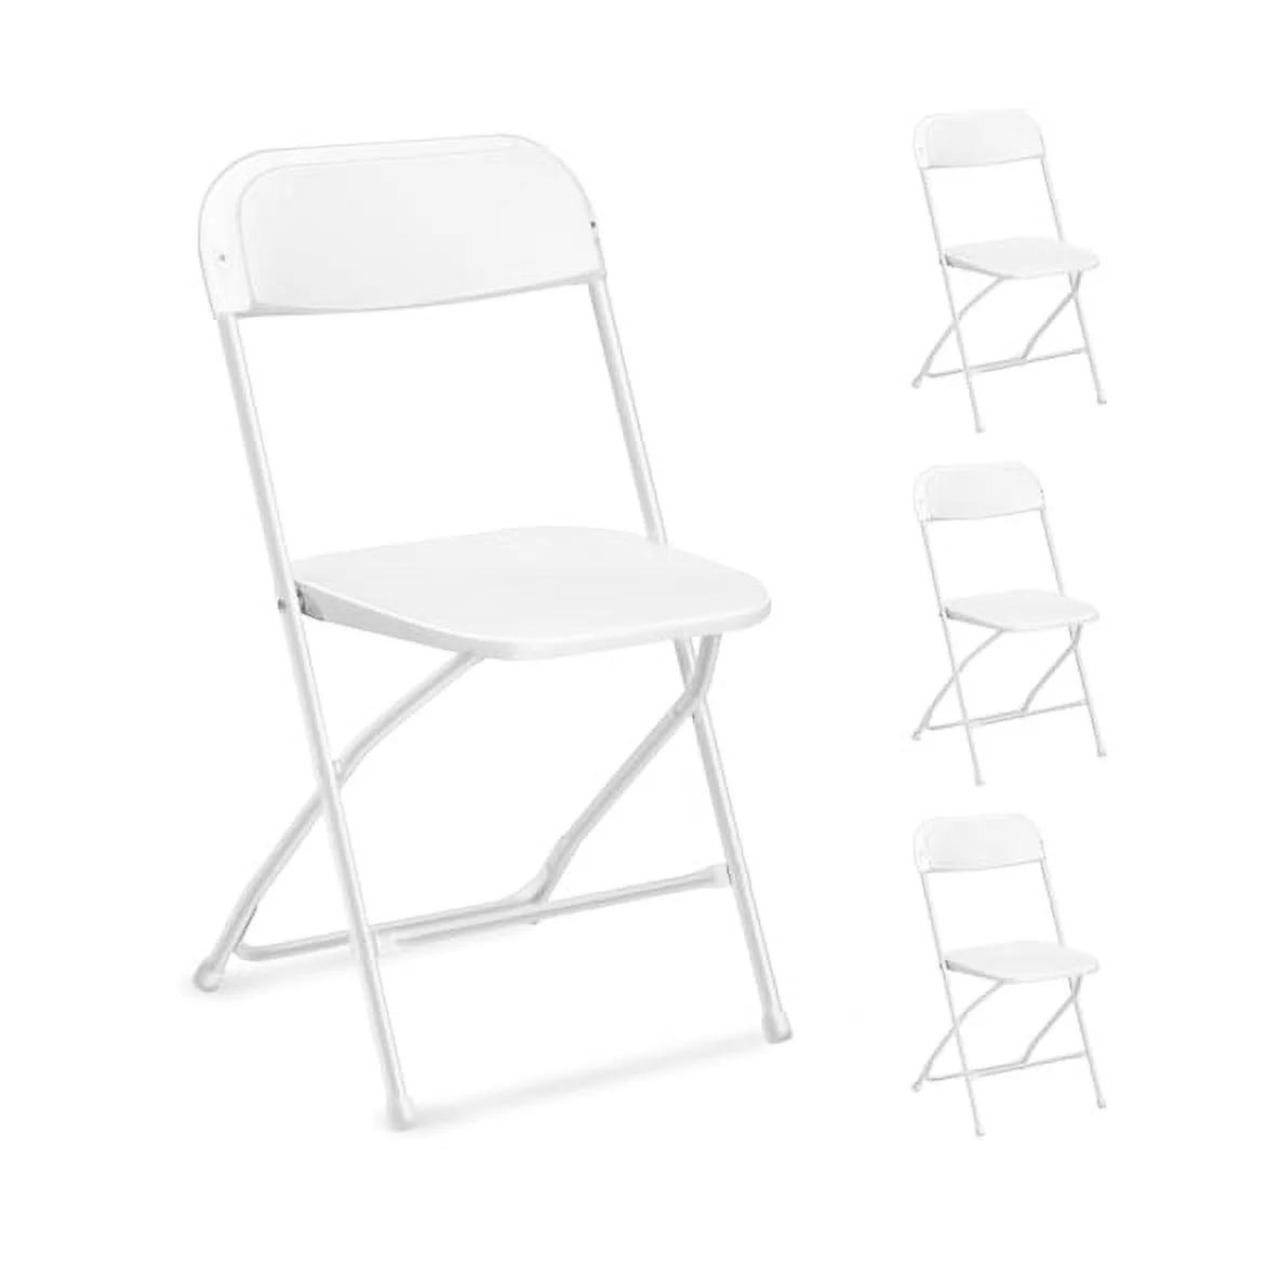 4-Pack Ktaxon Portable Plastic Folding Chairs